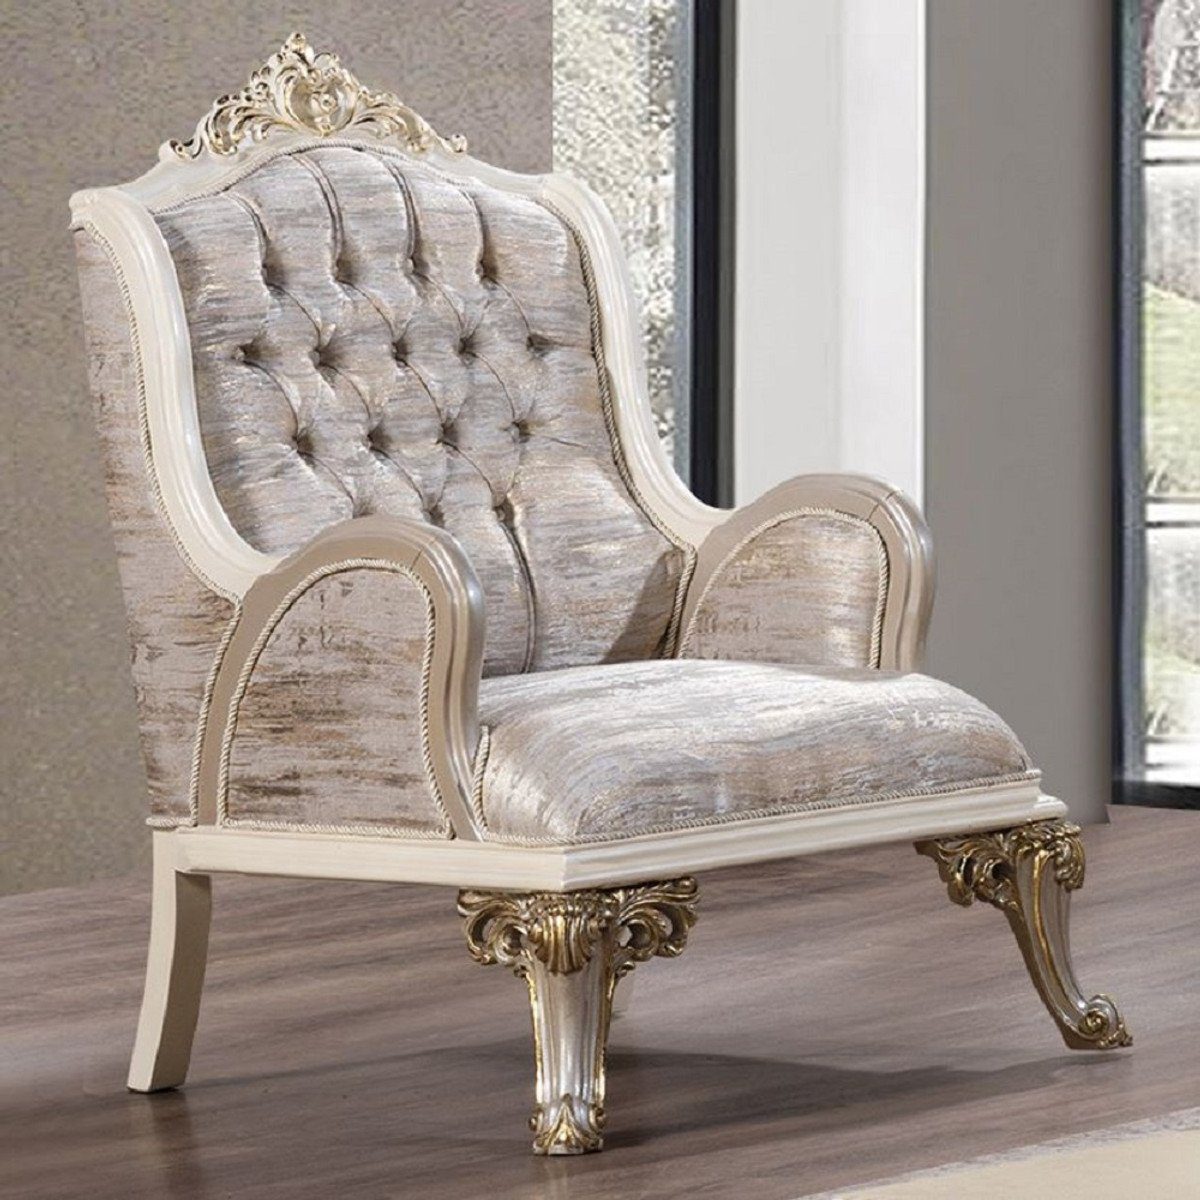 Casa Padrino Sessel Casa Padrino Luxus Barock Sessel Silber / Weiß / Grau /  Gold   Prunkvoller Wohnzimmer Sessel mit elegantem Muster   Luxus ...